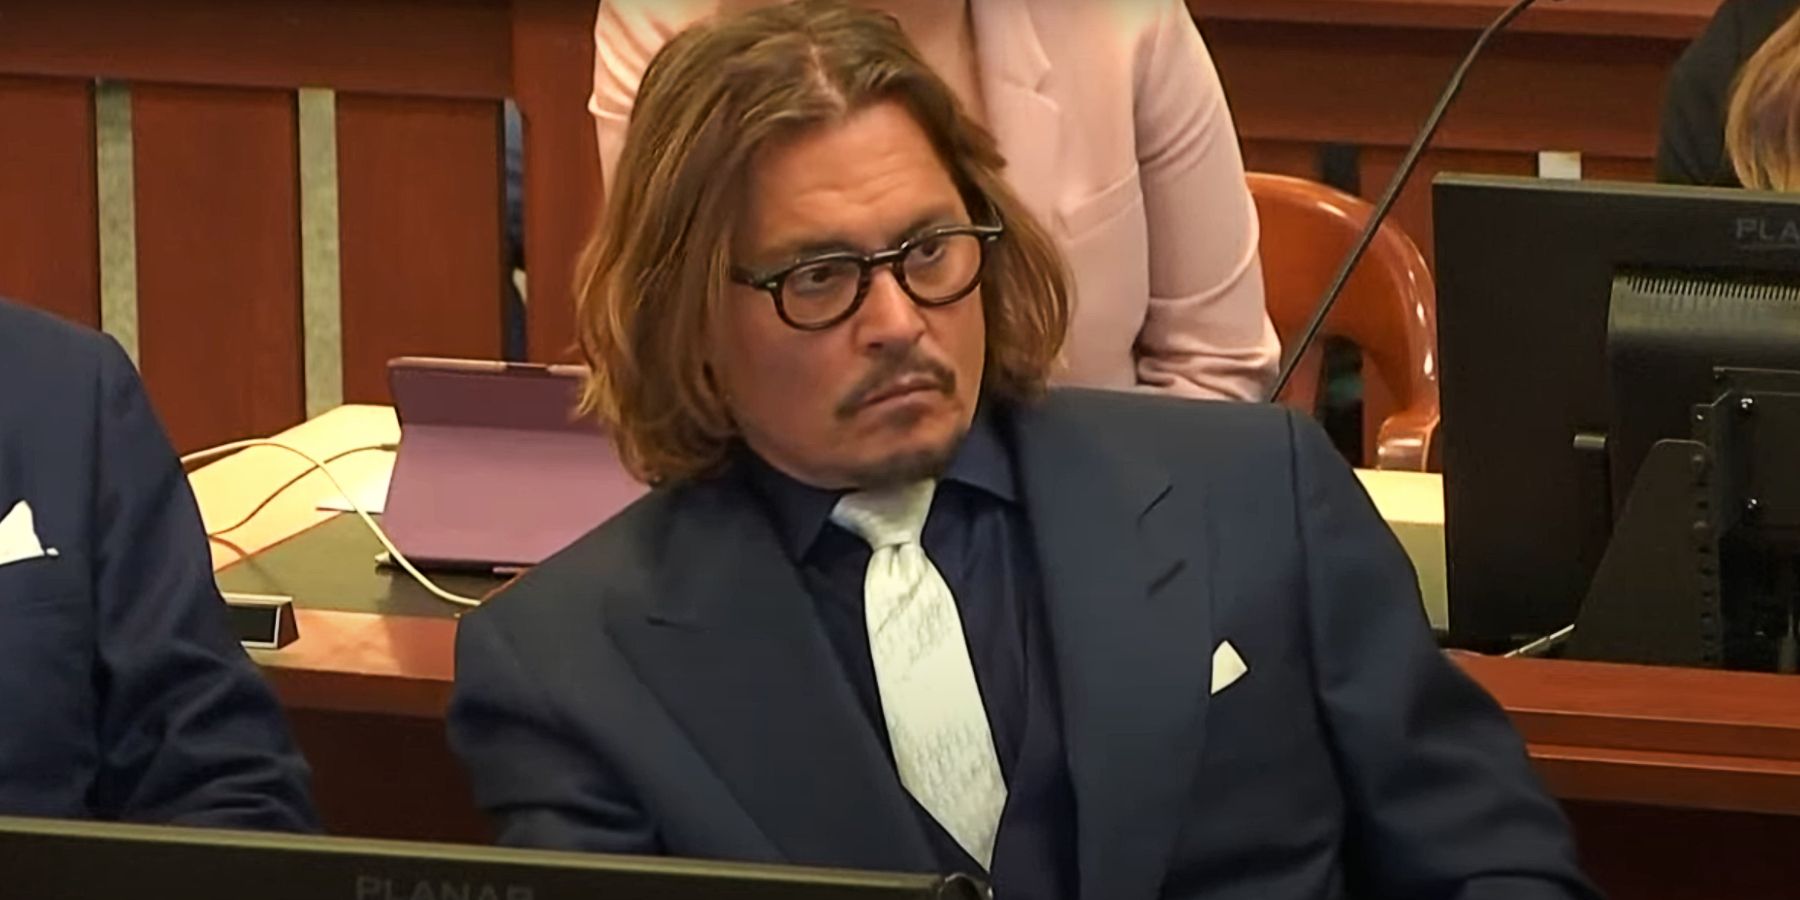 Johnny Depp Amber Heard Trial (Screenshot safe to use)